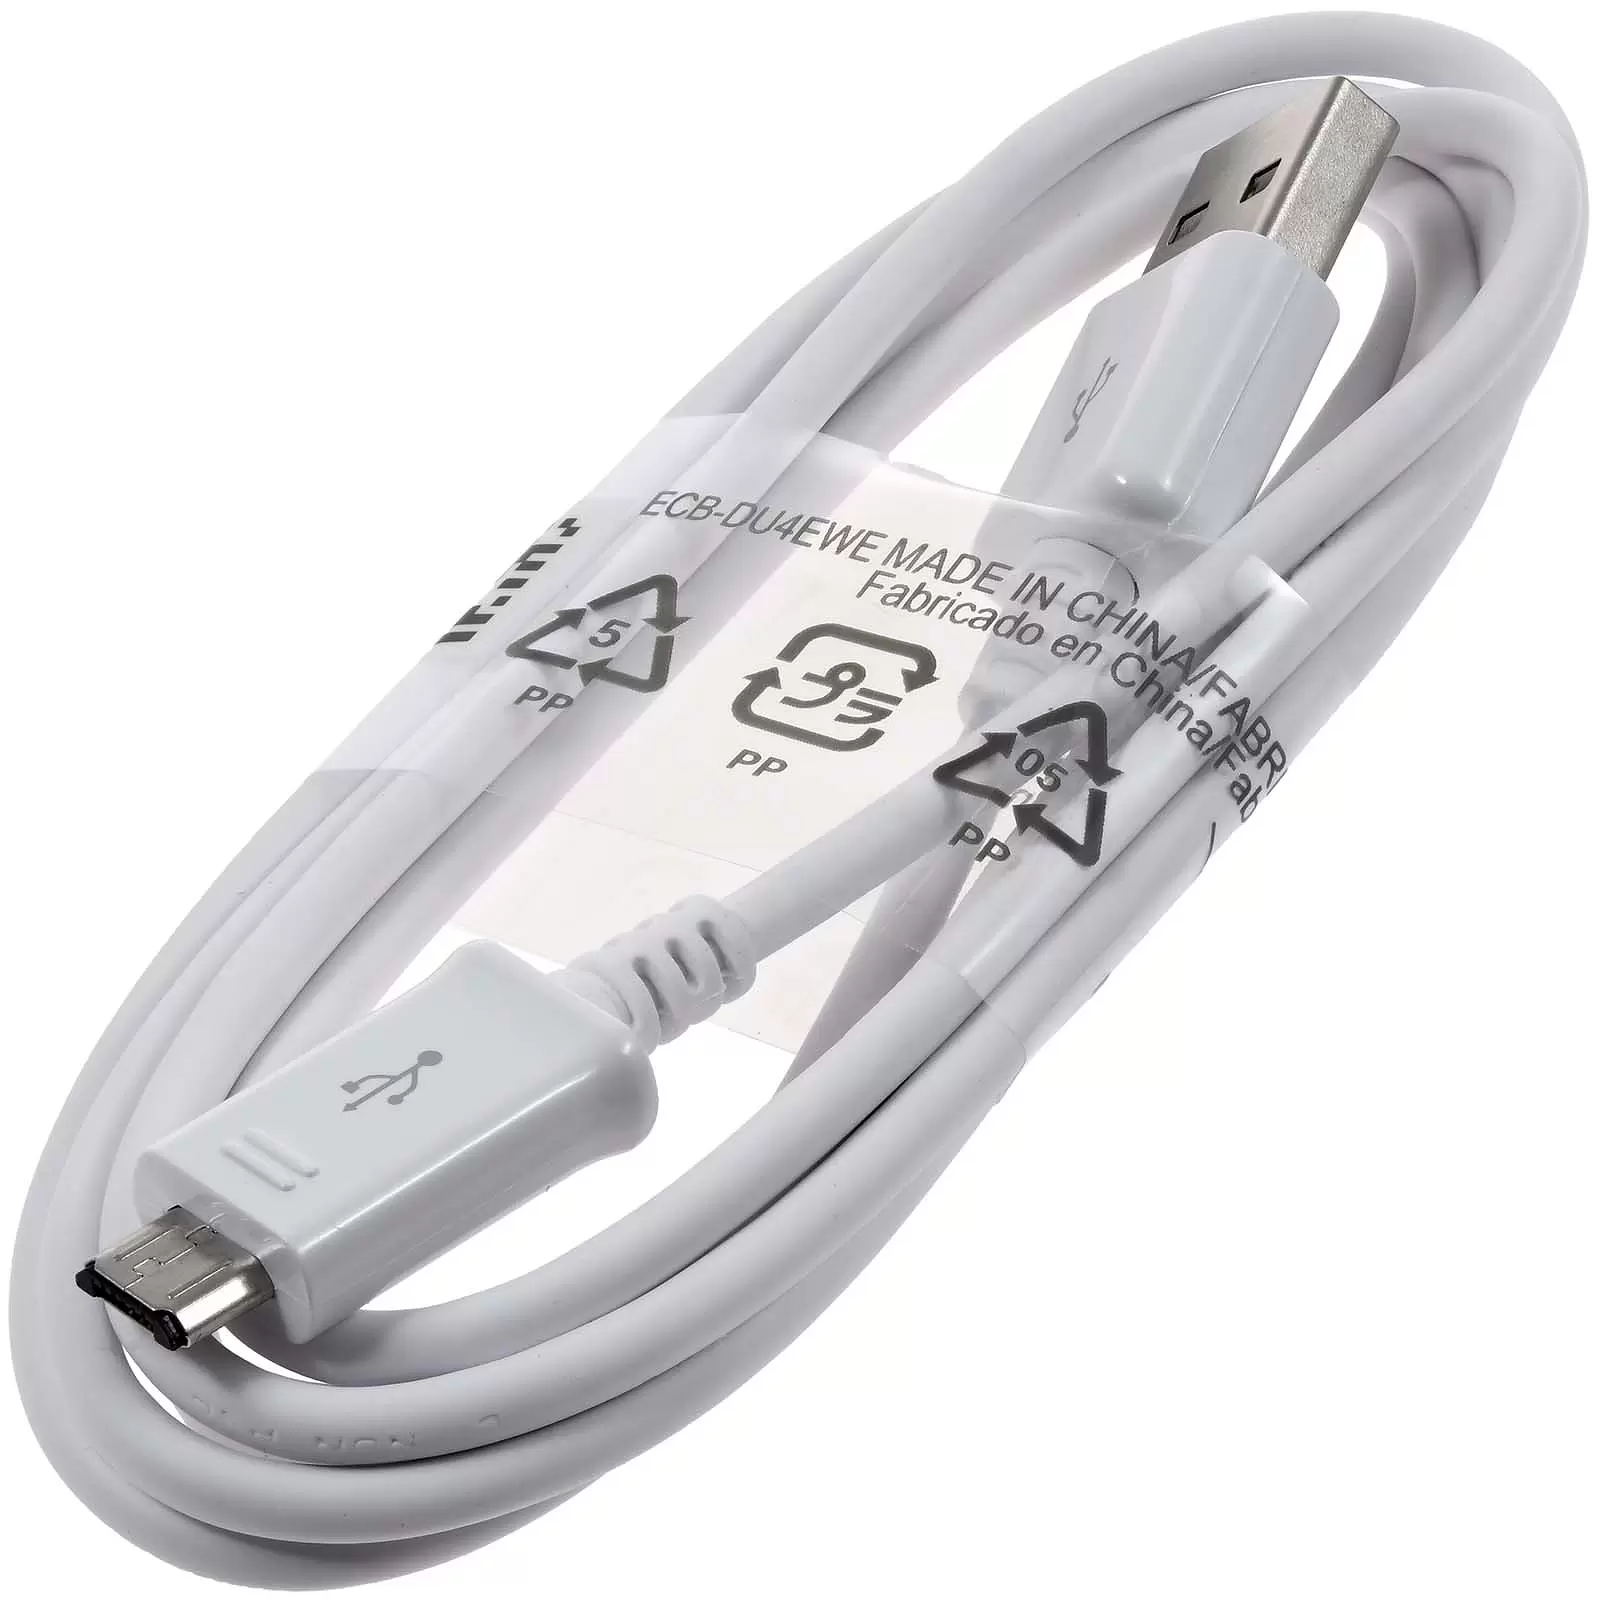 Samsung ECB-DU4EWE USB-A auf Micro-USB Datenkabel Ladekabel 1,5m weiß